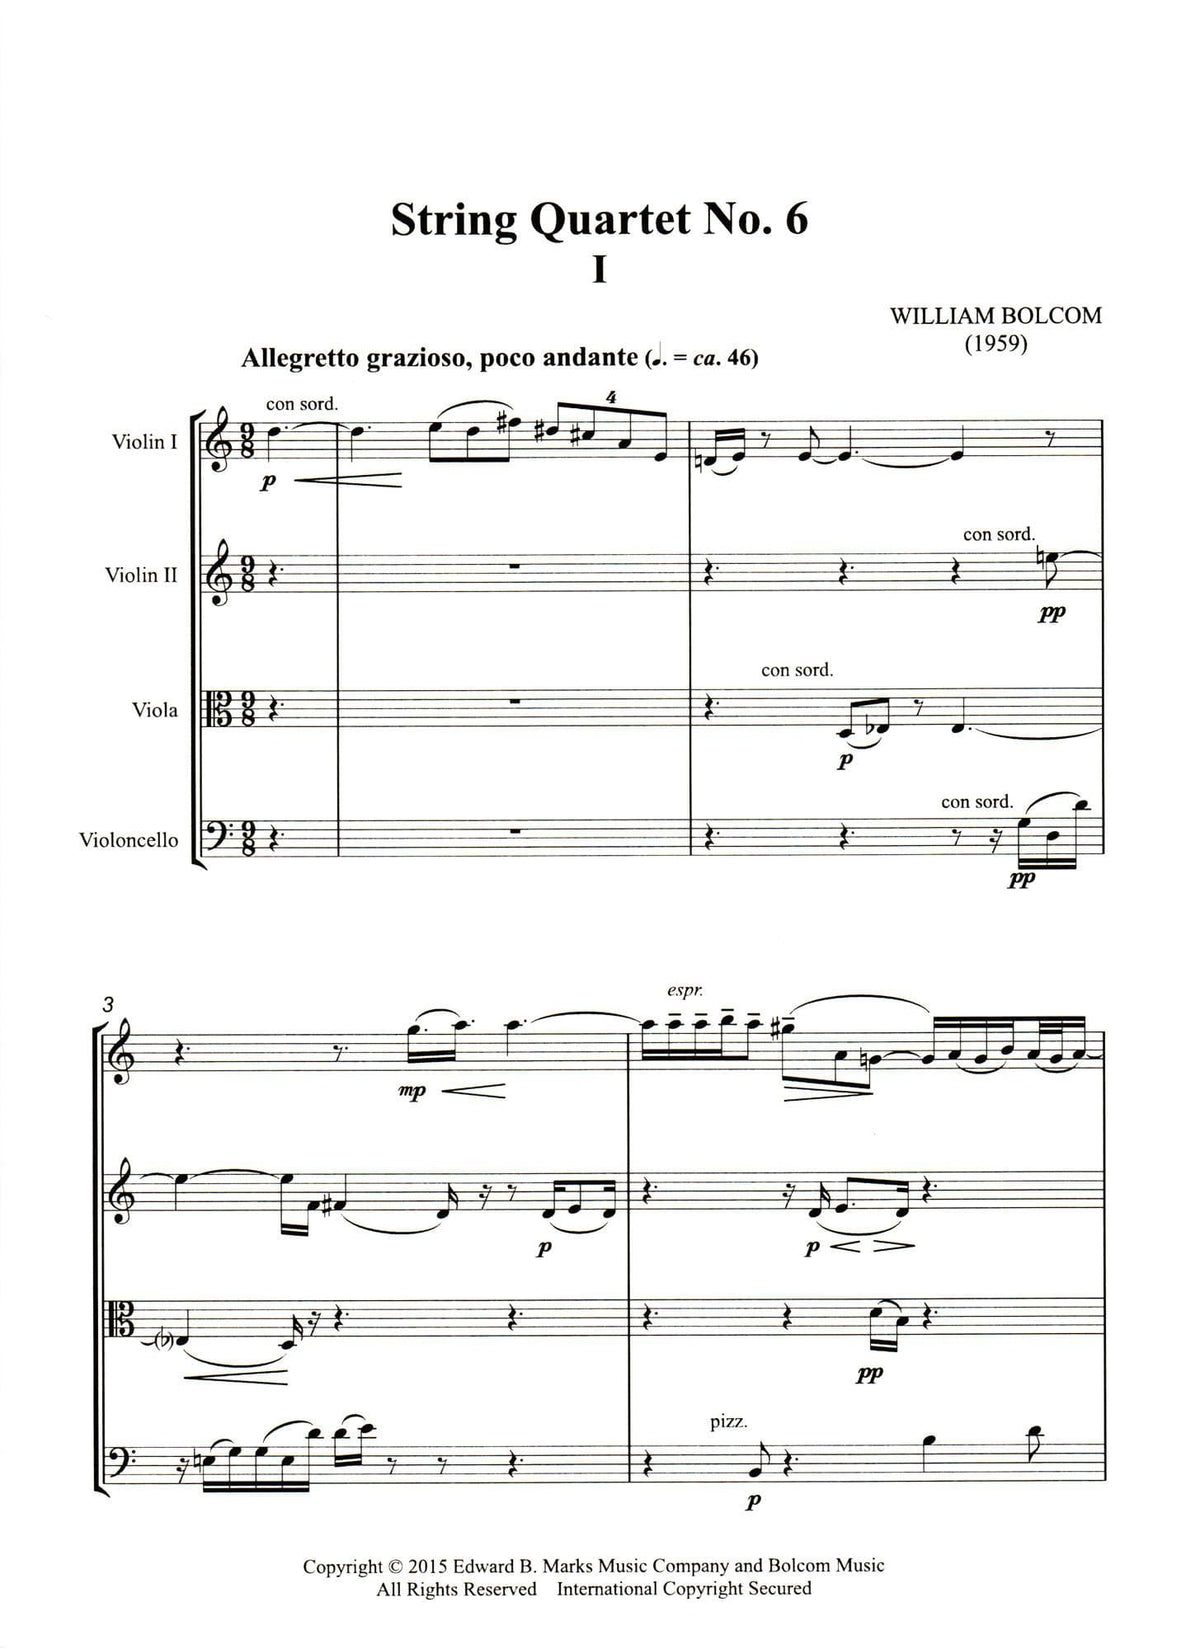 Bolcom, William - String Quartet No. 6 - Score and Parts - Edward B. Marks Music Company